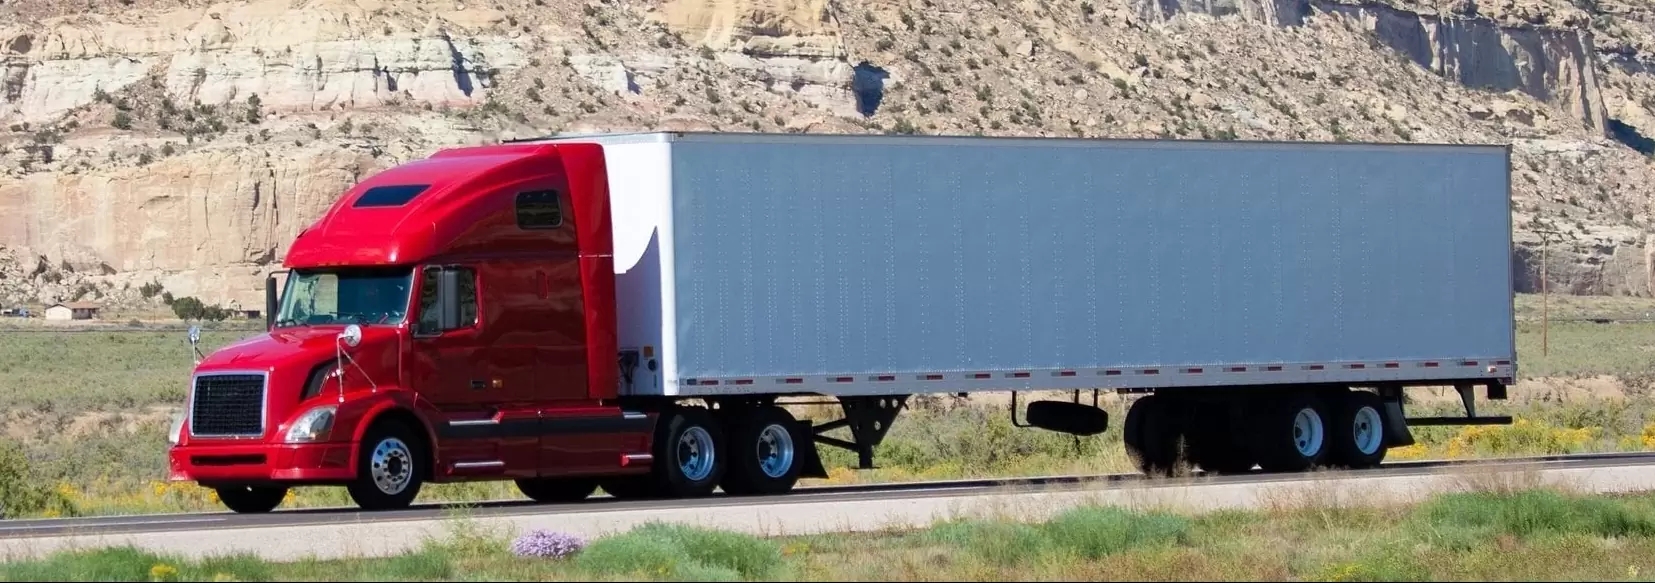 truck on highway